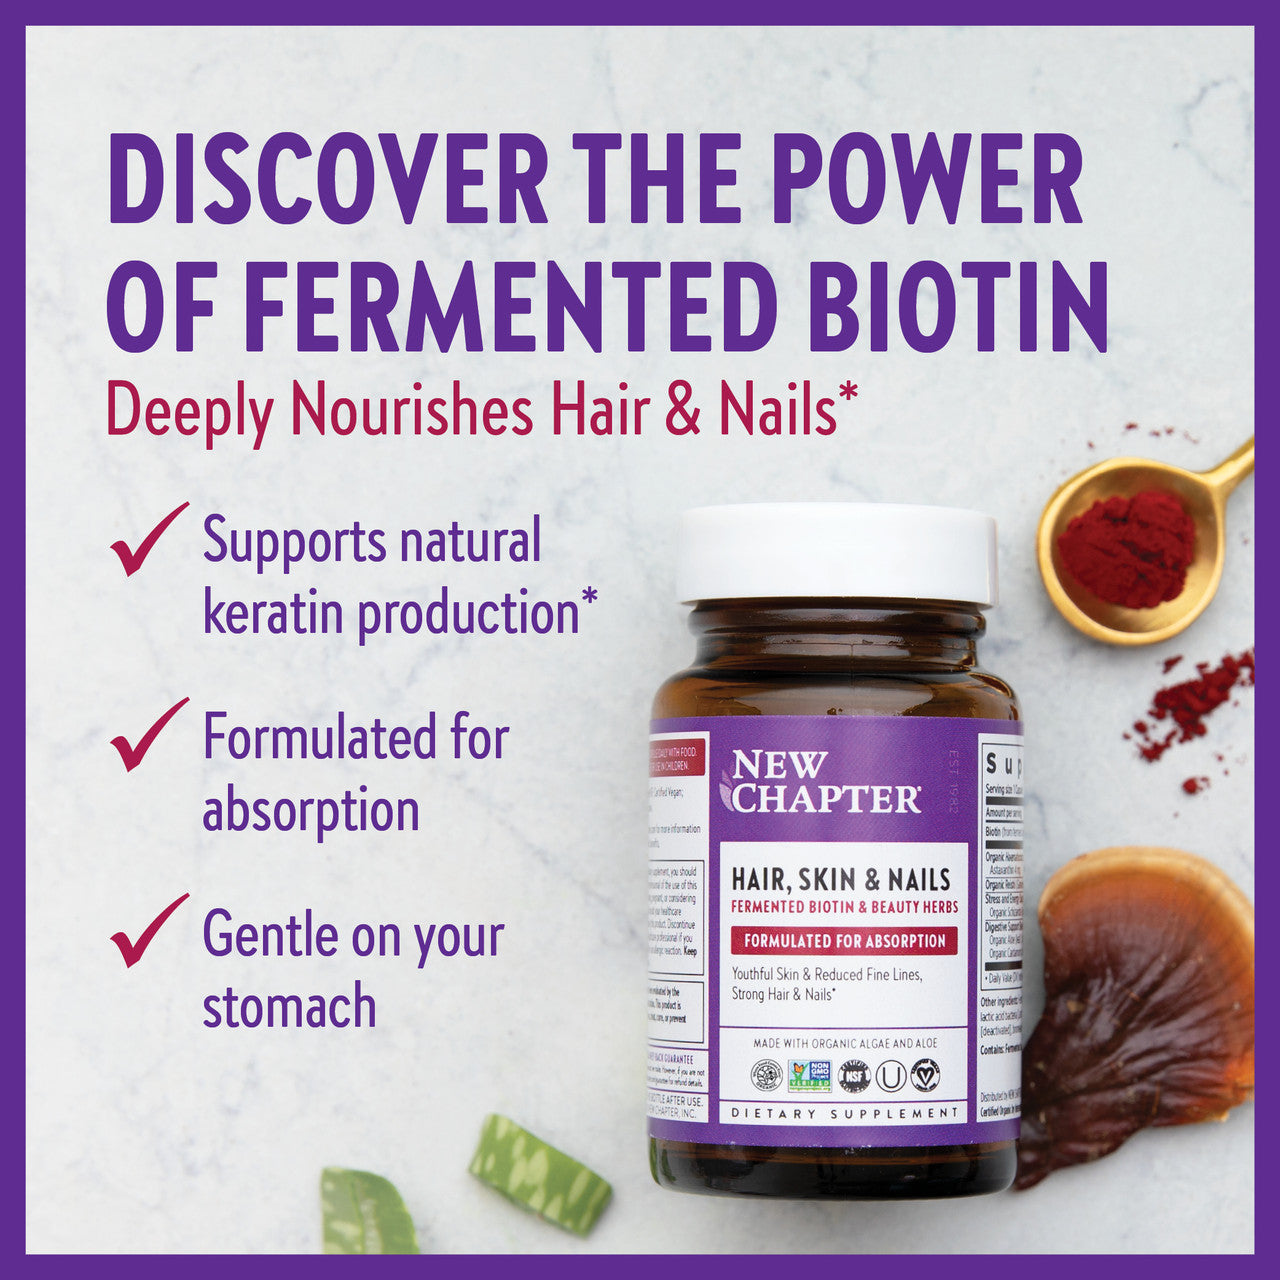 Hair, Skin & Nails: Fermented Biotin & Beauty Herbs